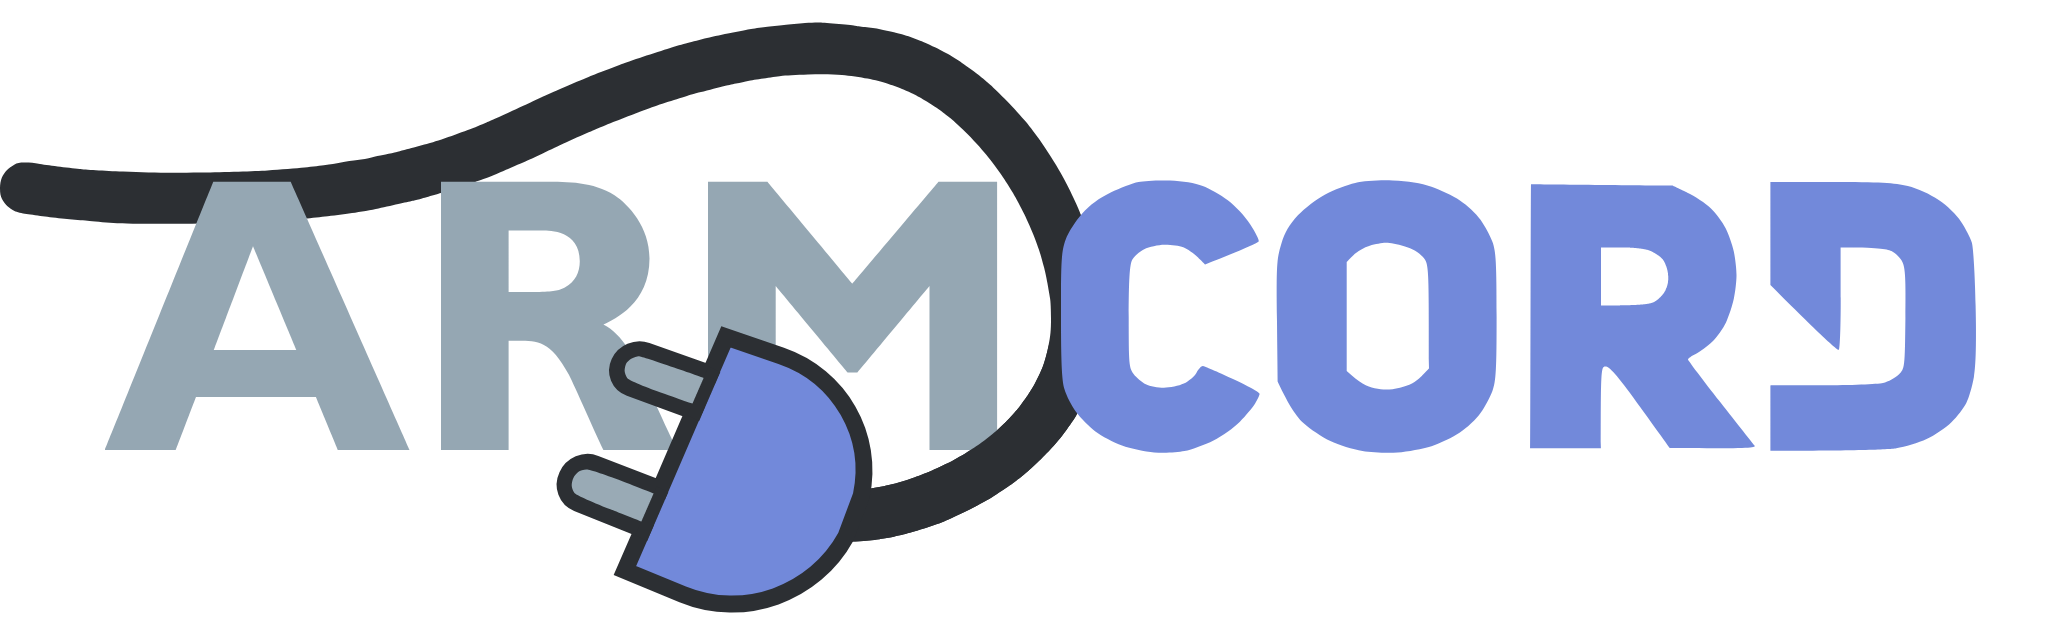 ArmCord logo